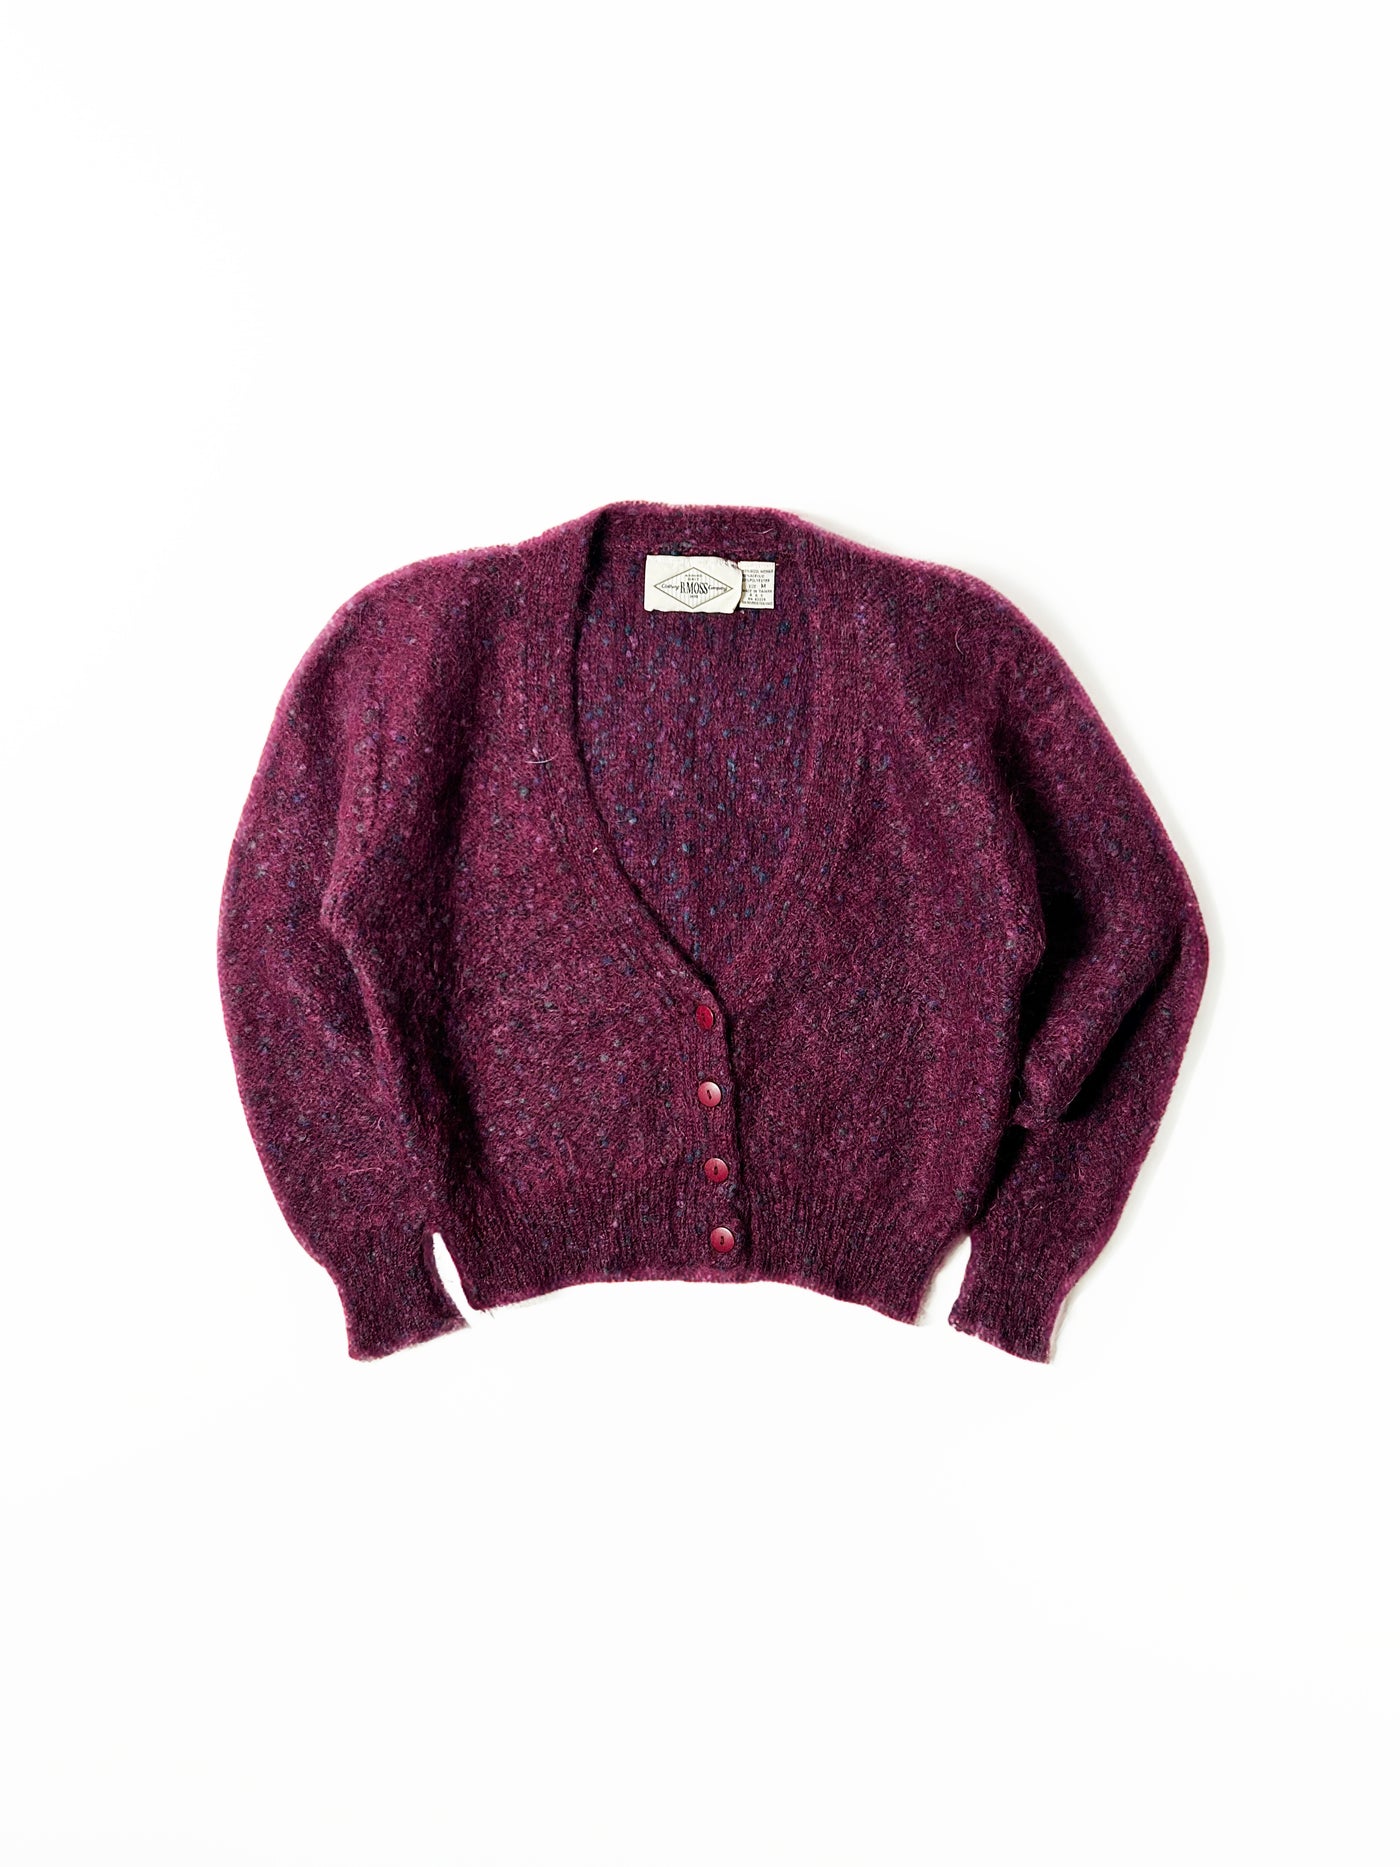 Vintage 80s B. Moss Mohair Cardigan Sweater